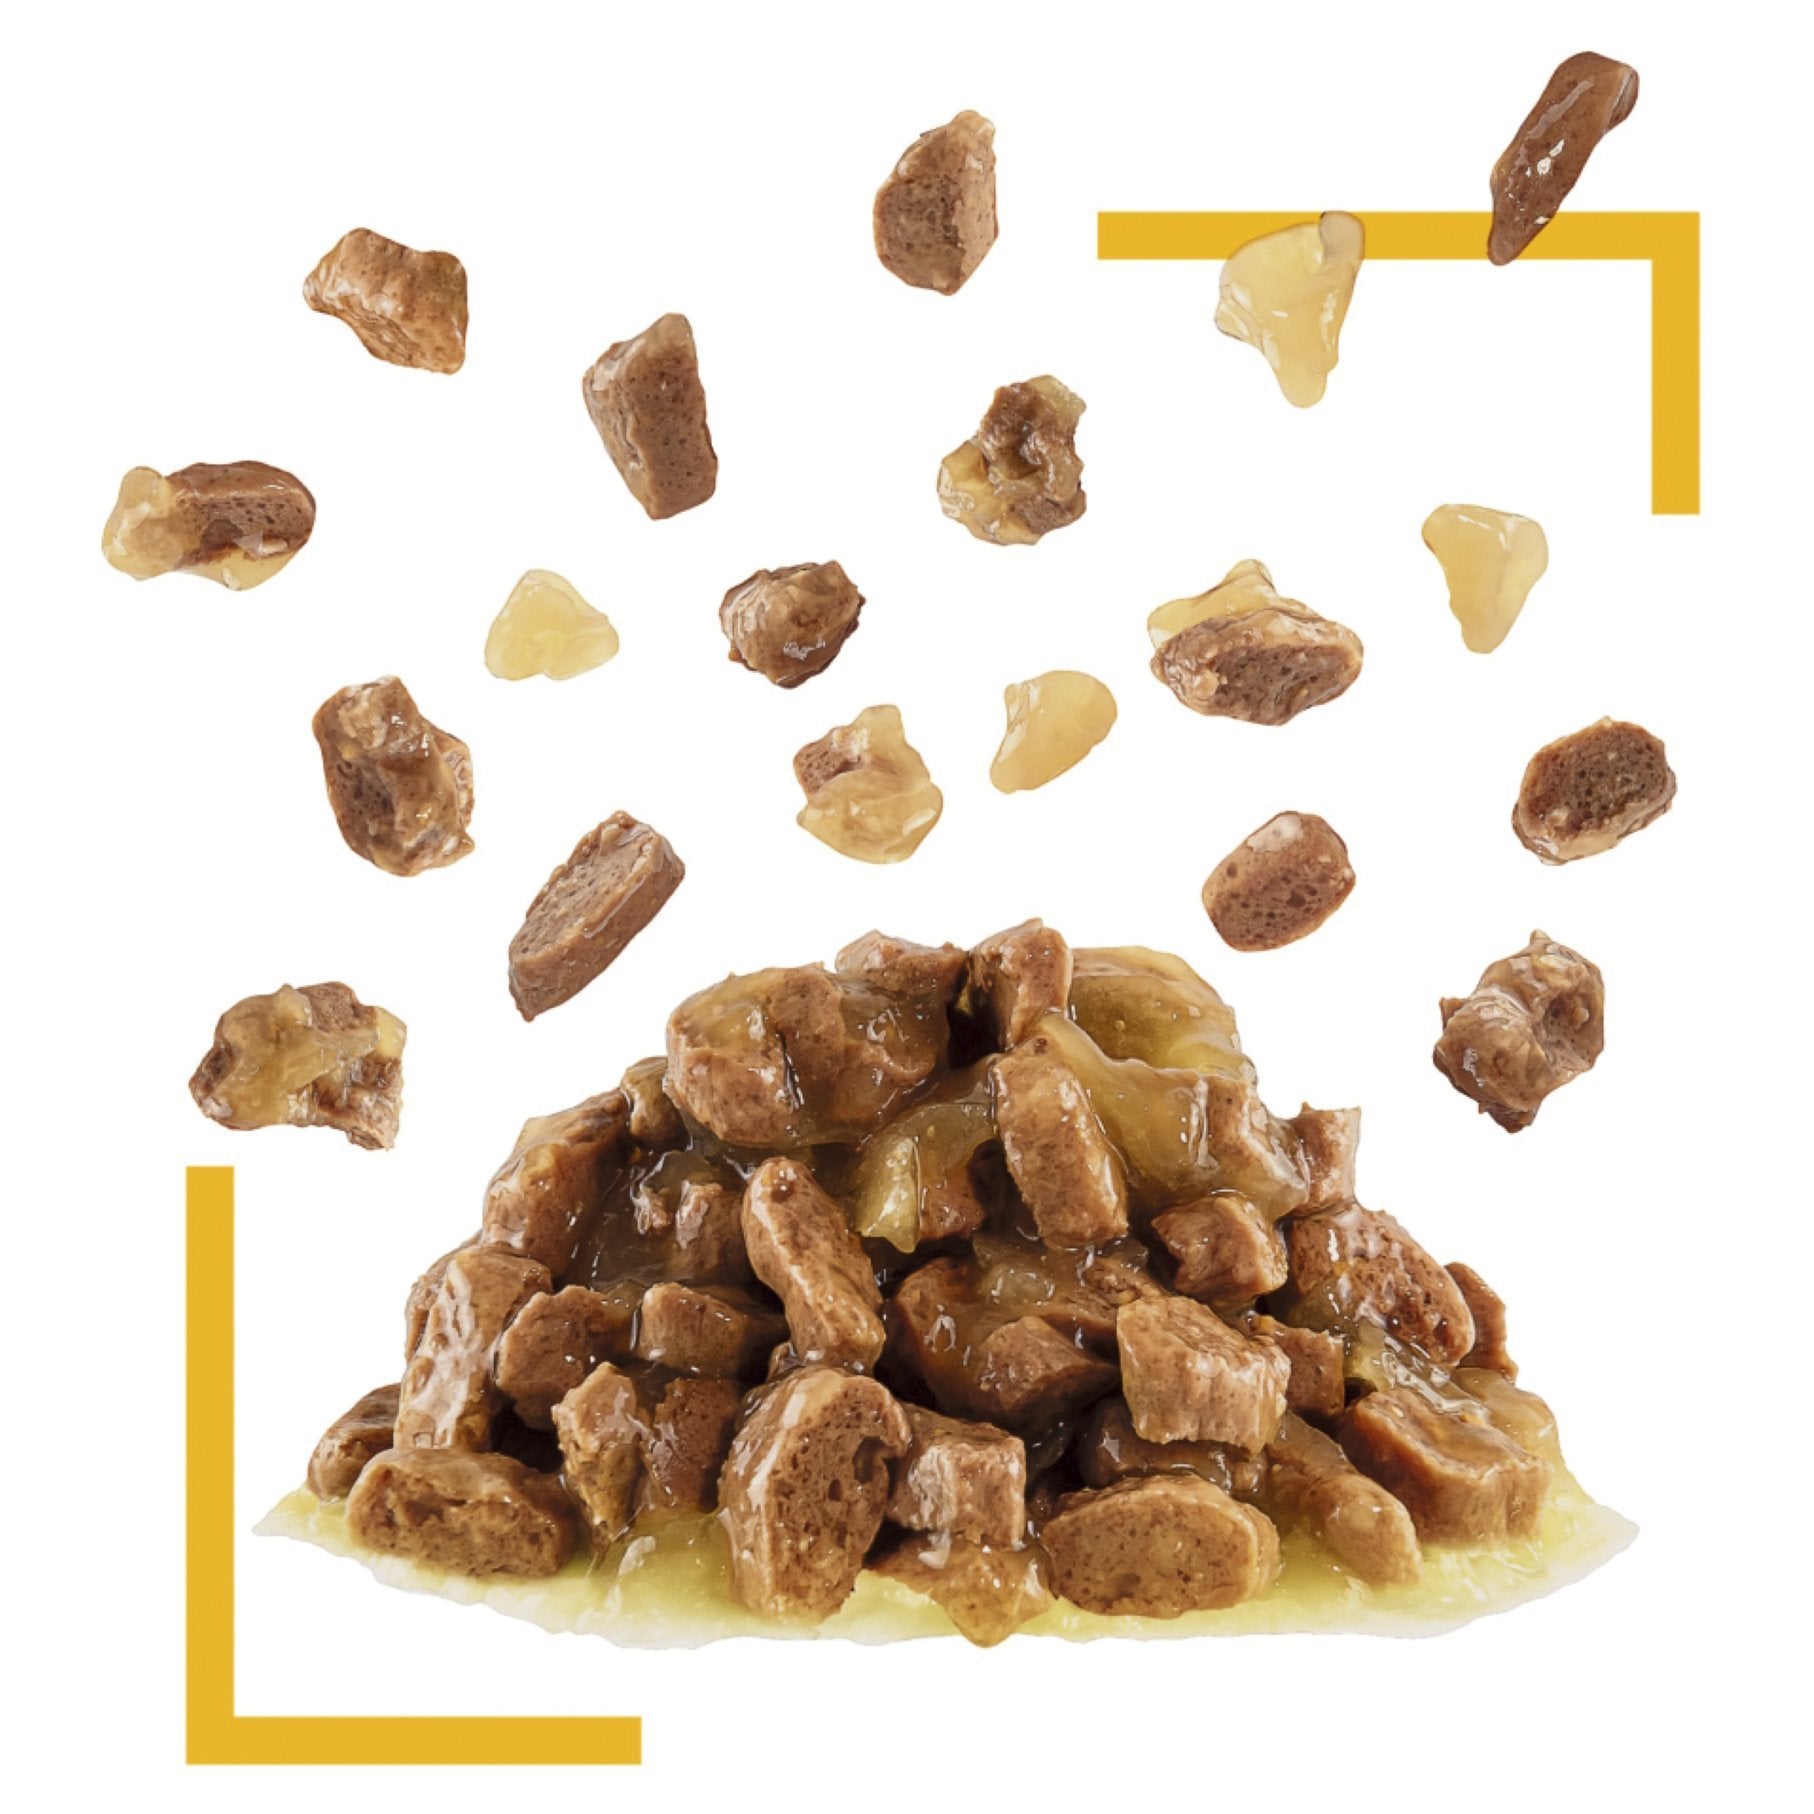 Royal Canin Cat Wet Food Pouches Sensory Taste Jelly 12x85g - Woonona Petfood & Produce